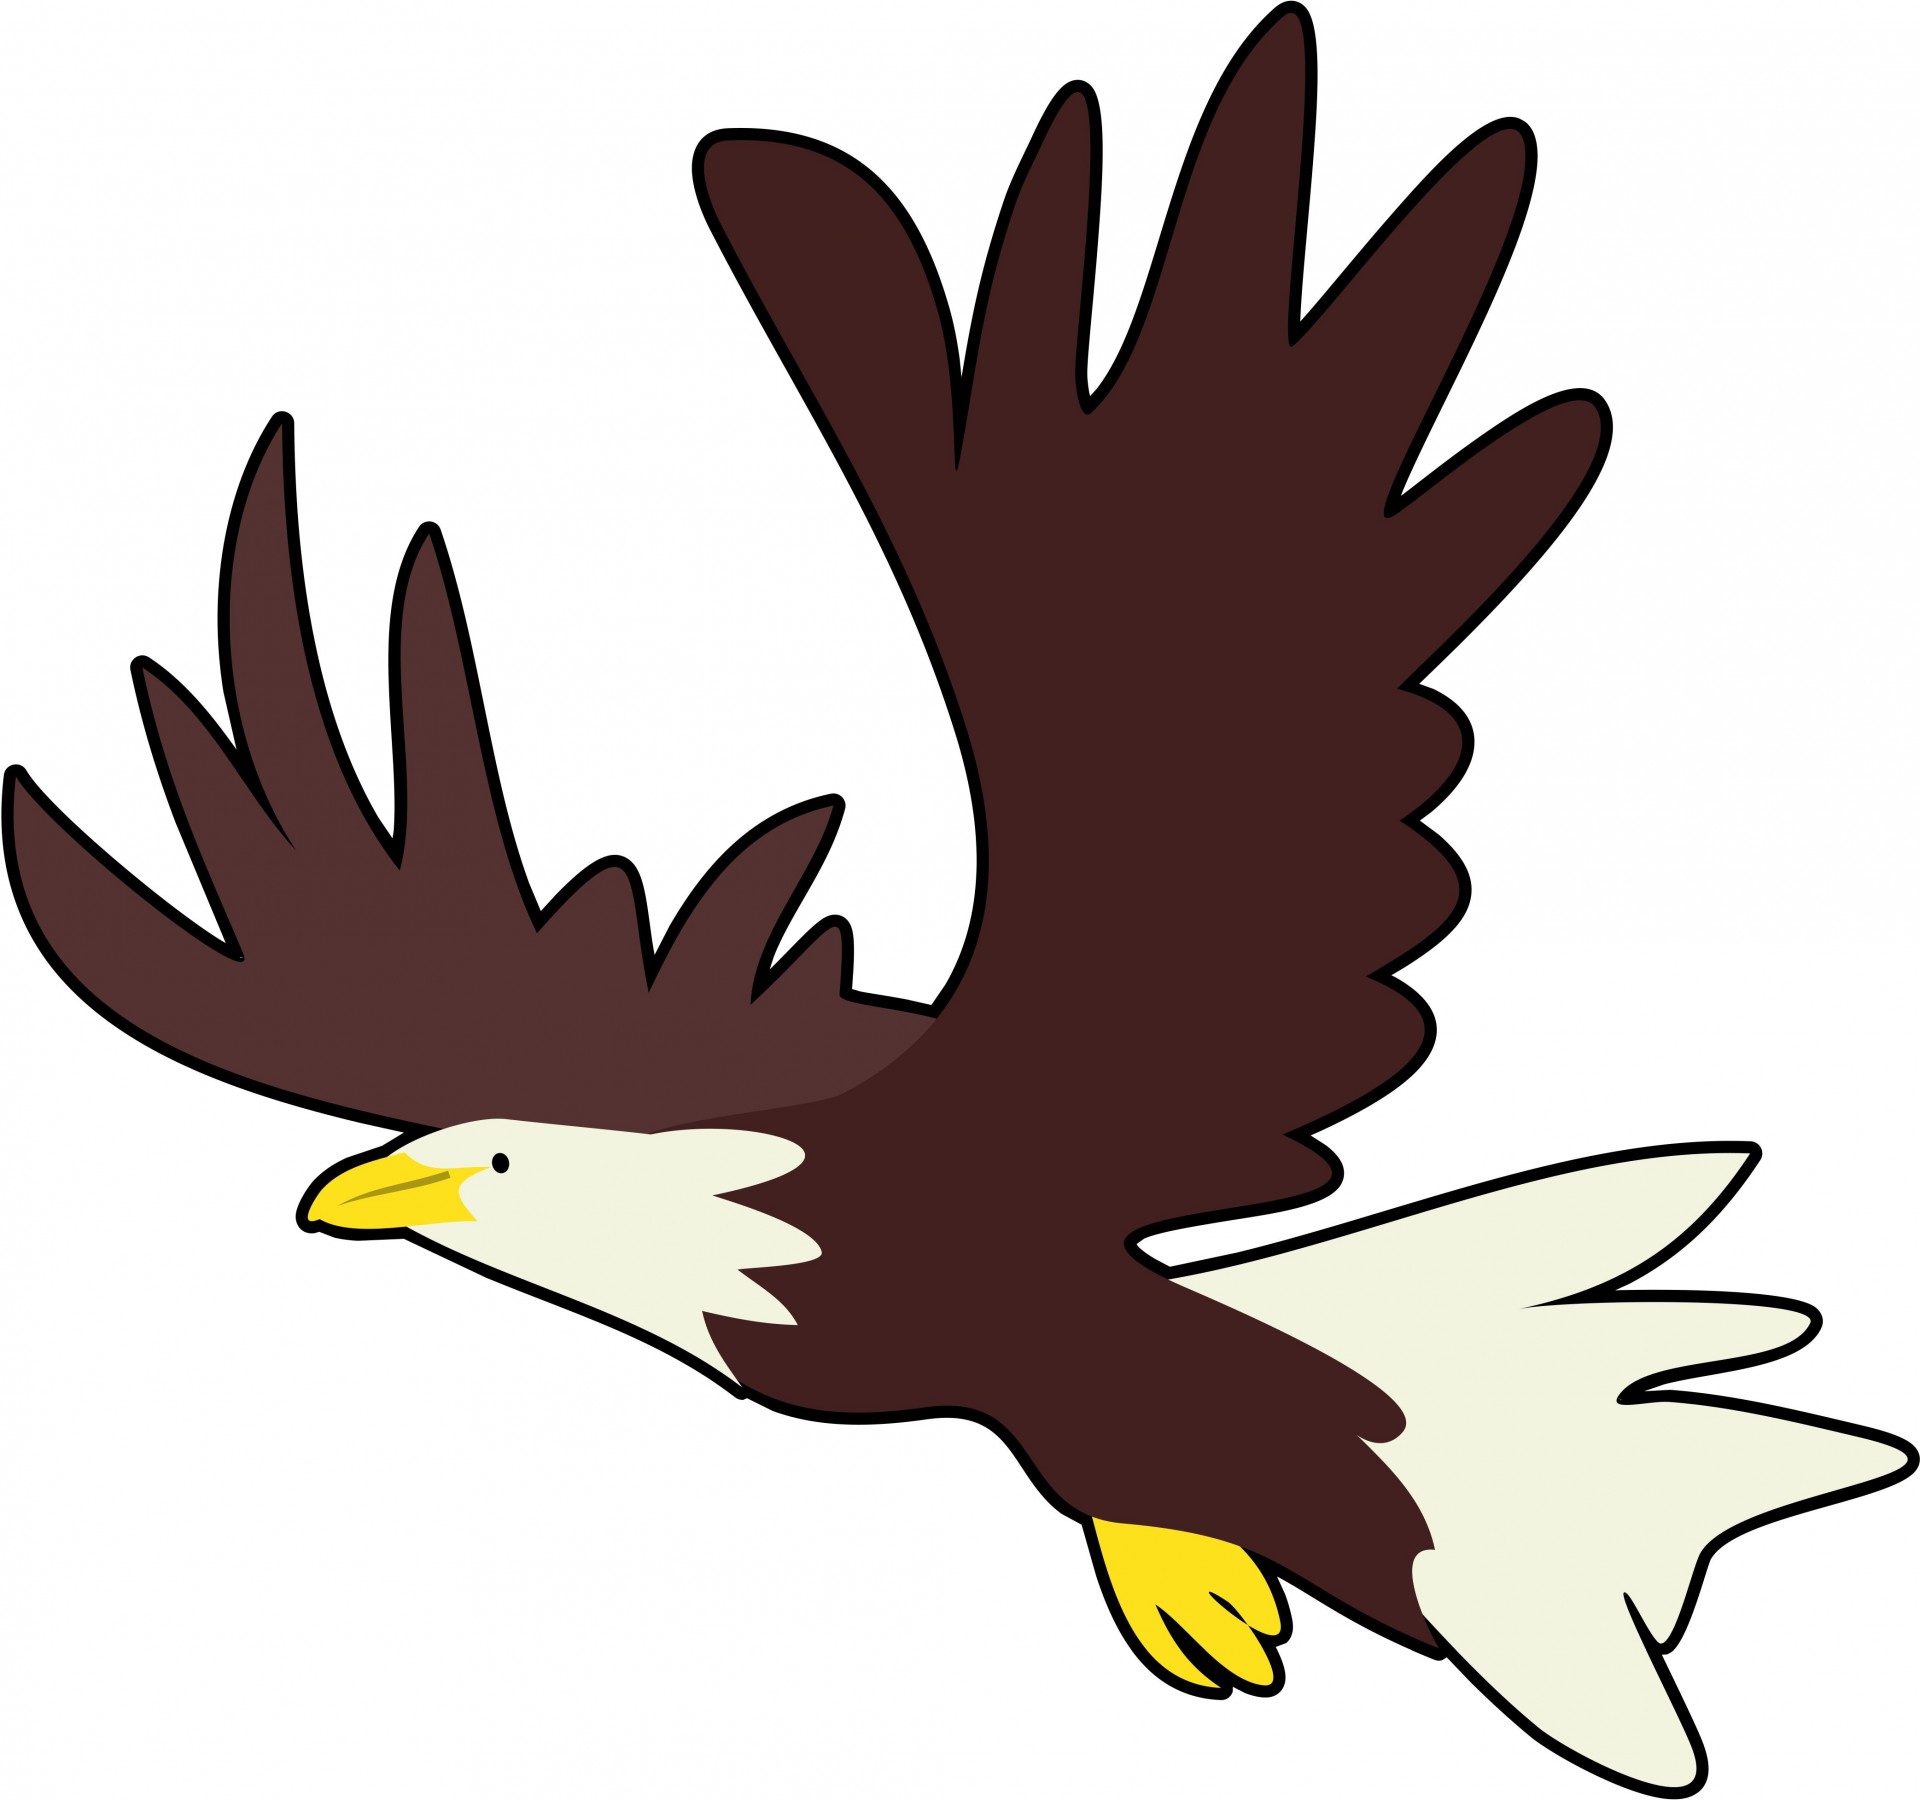 American Bald Eagle Images - Public Domain Pictures - Page 1